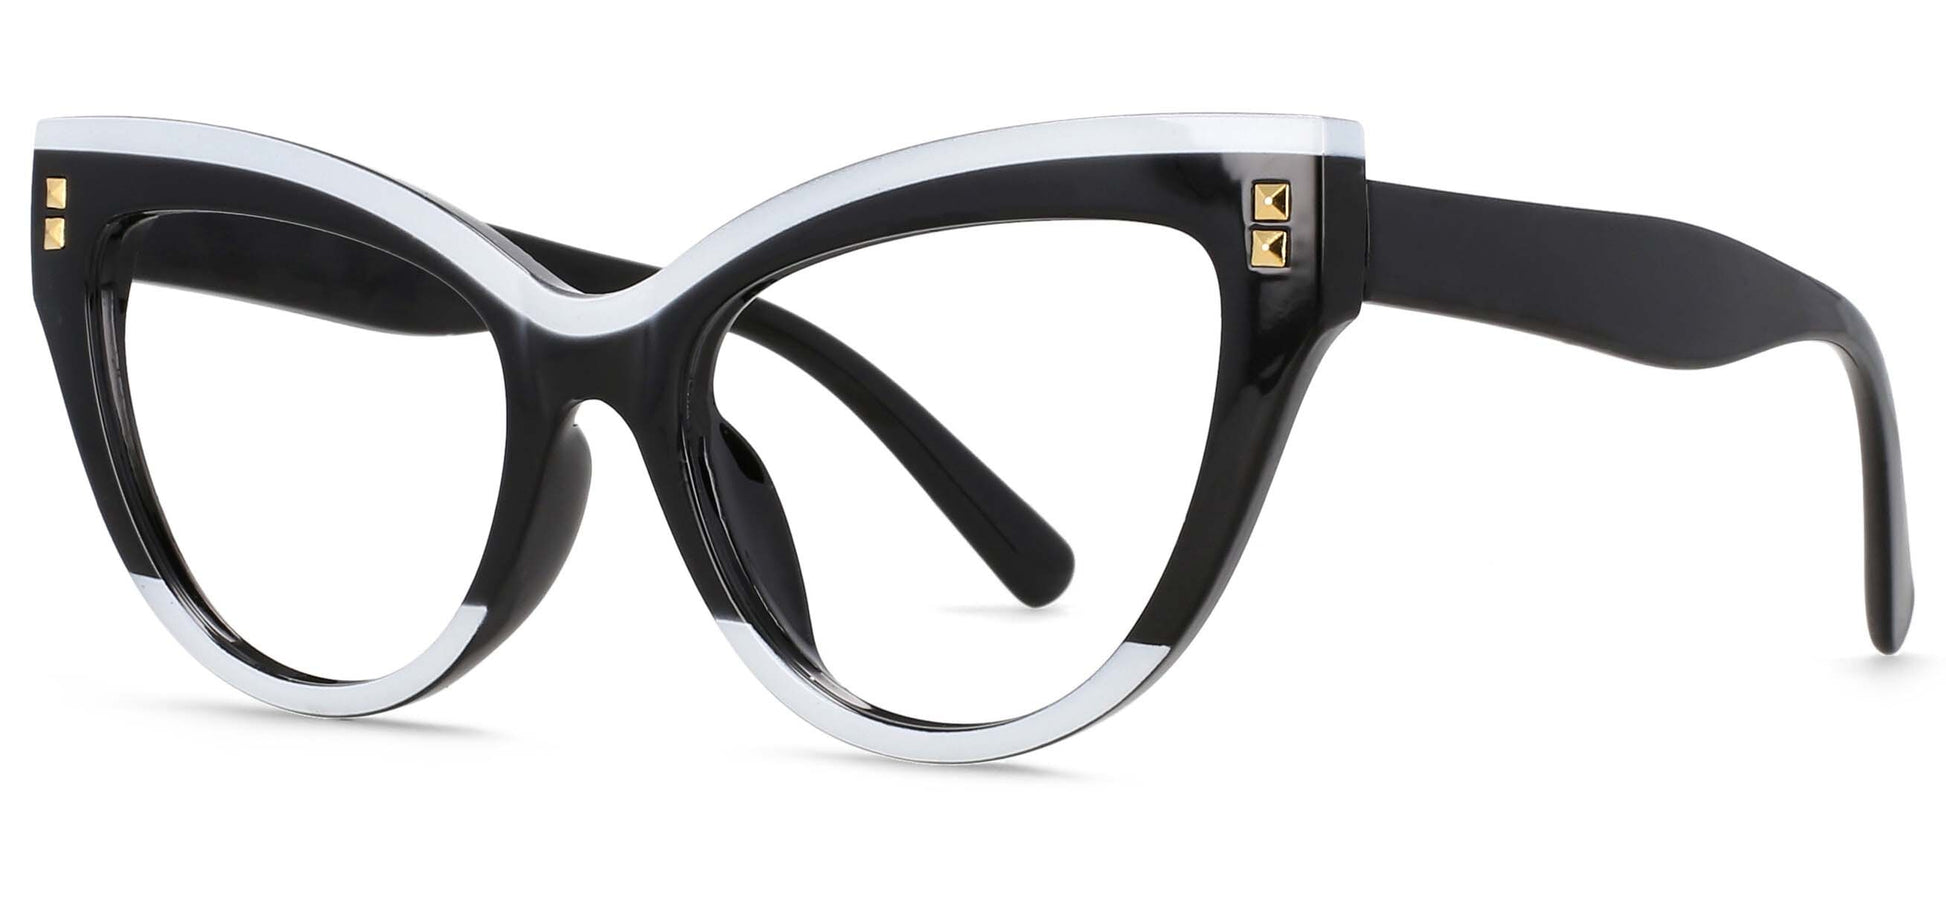 TEEK - Contrasting Cat Eye Reading Glasses | Prescribed or Zero Strength EYEGLASSES theteekdotcom BlackC1 0 